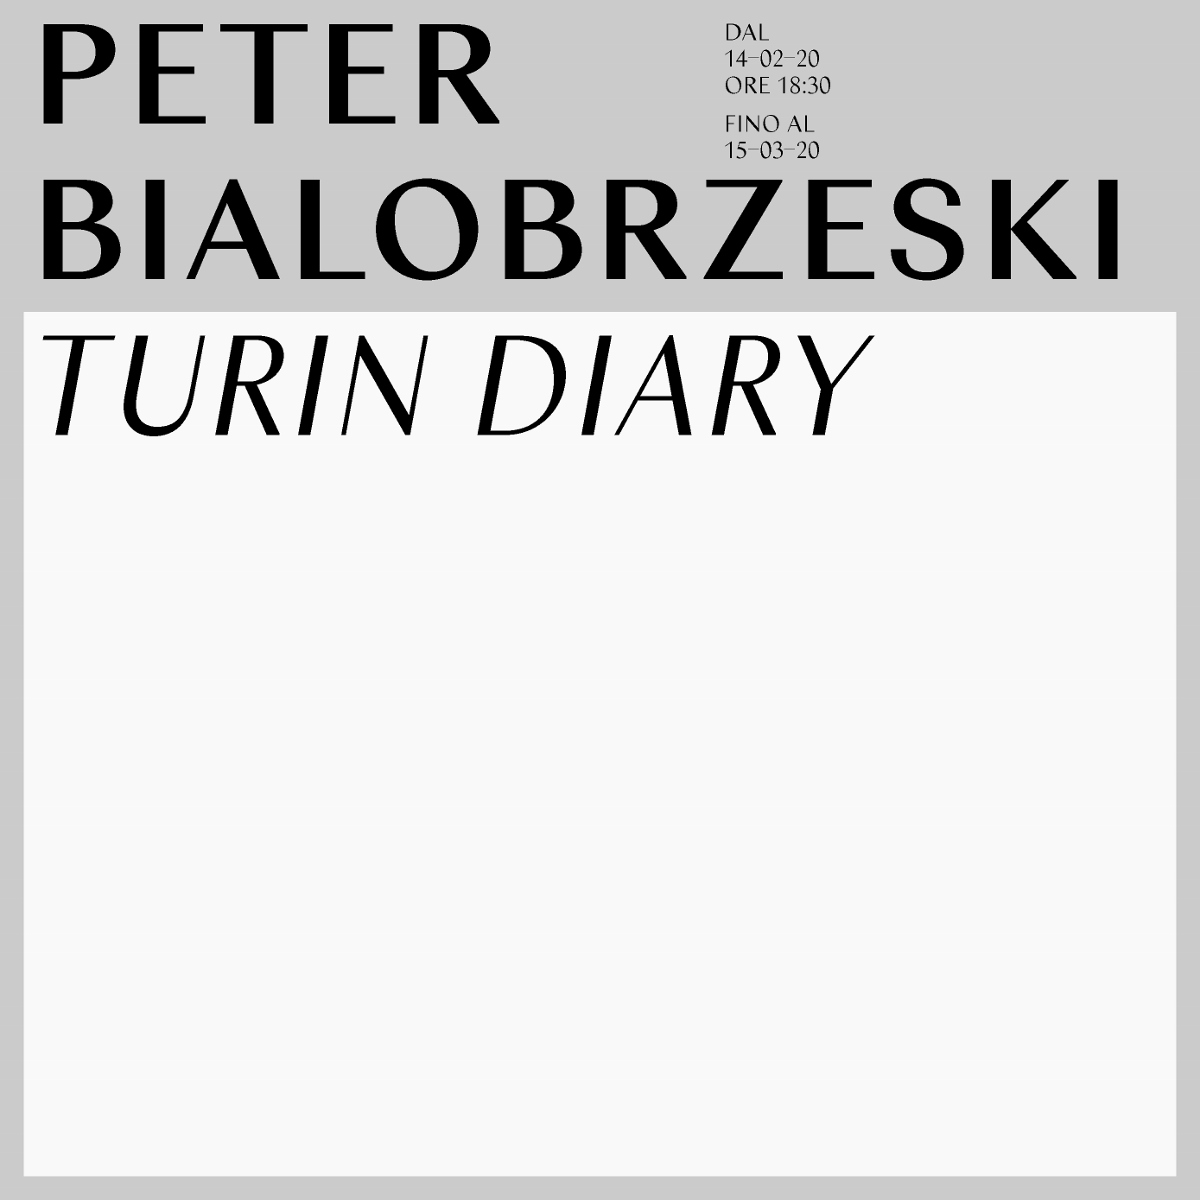 Peter Bialobrzeski - Turin diary